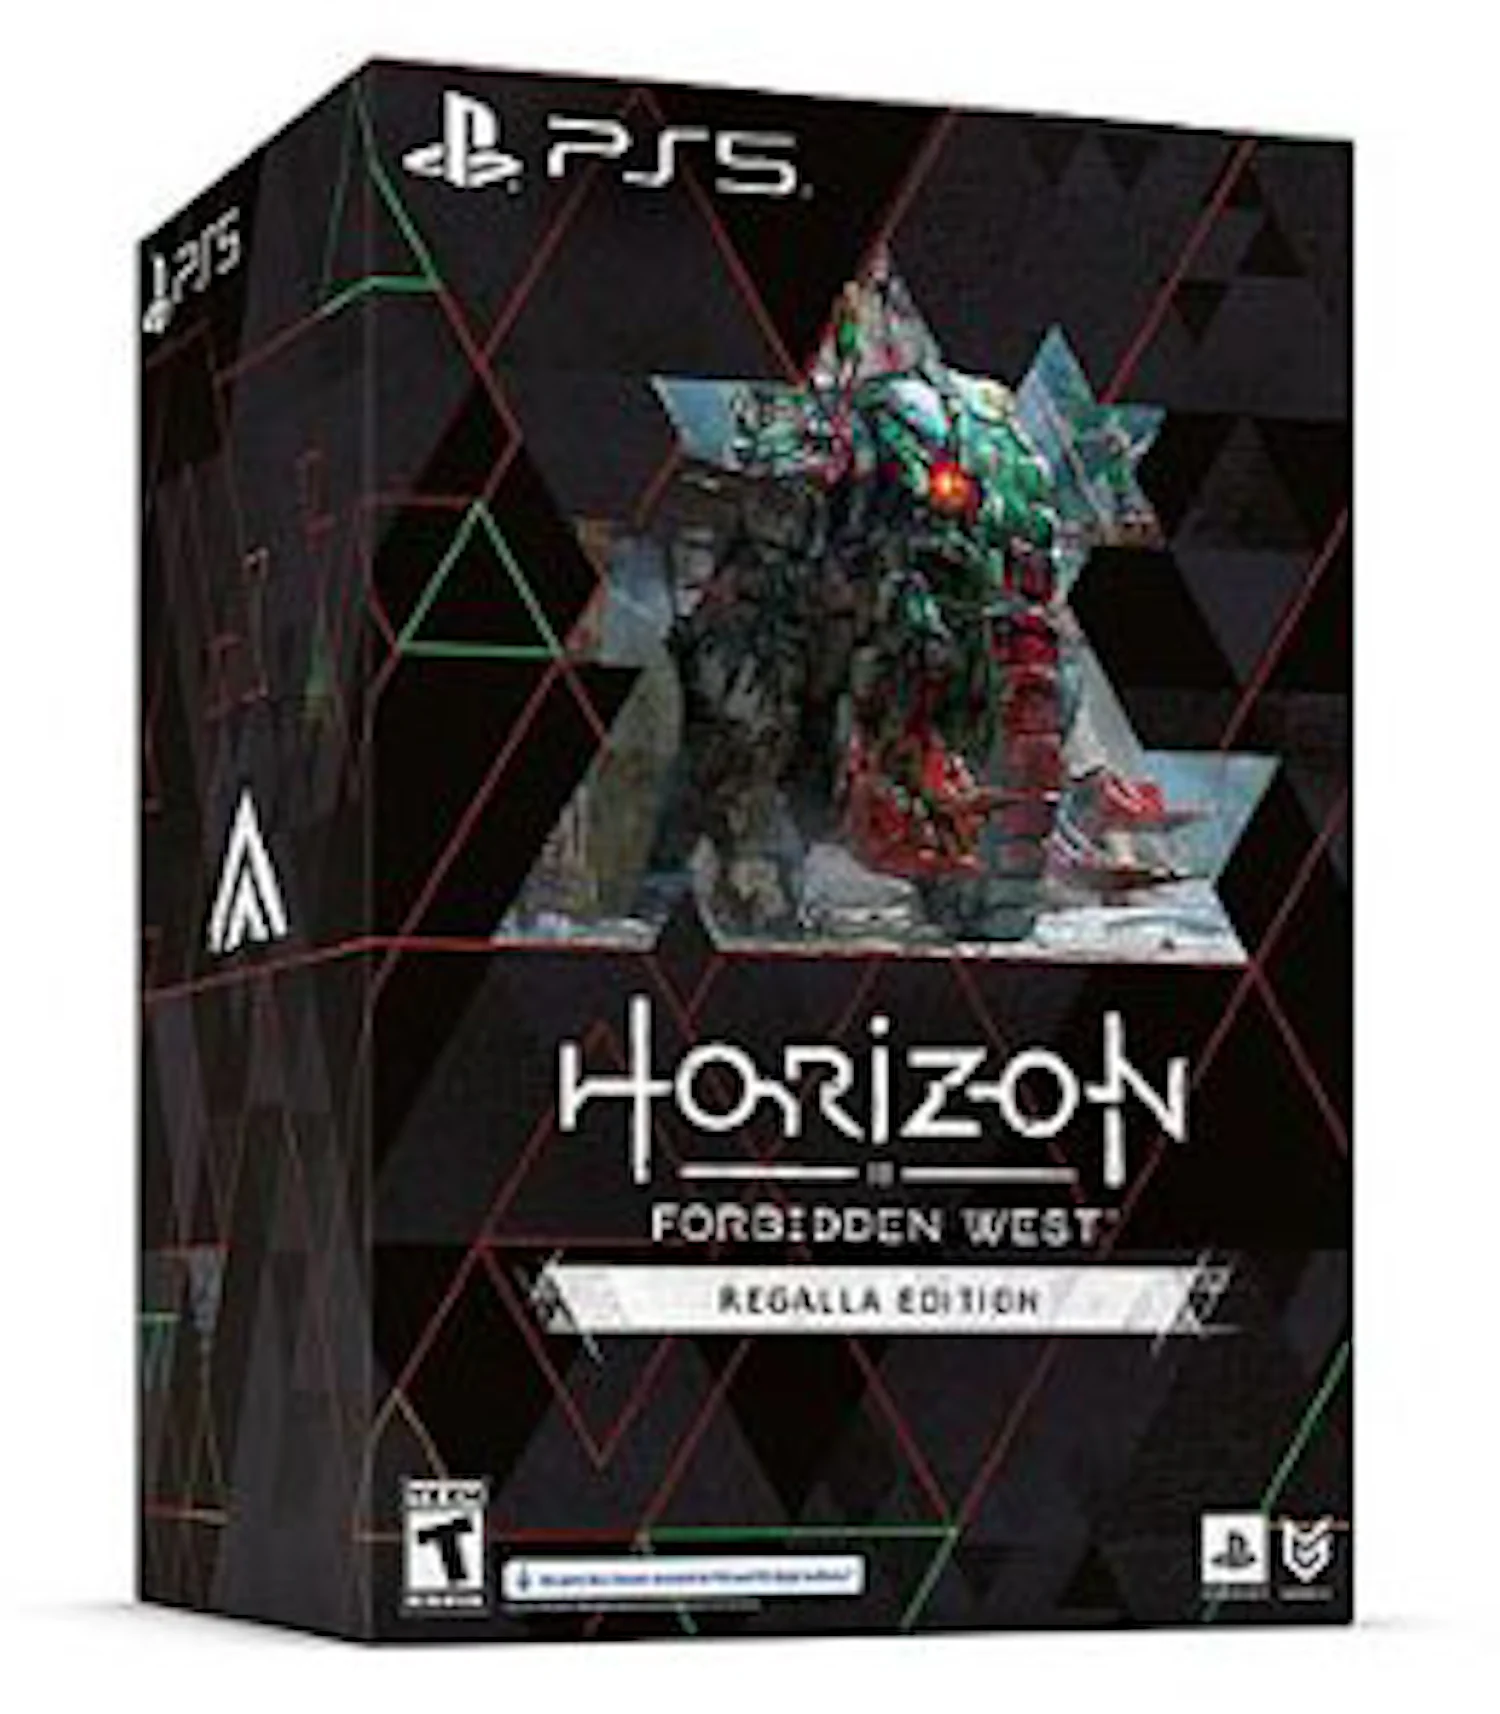 Horizon Forbidden West (PS4) – igabiba